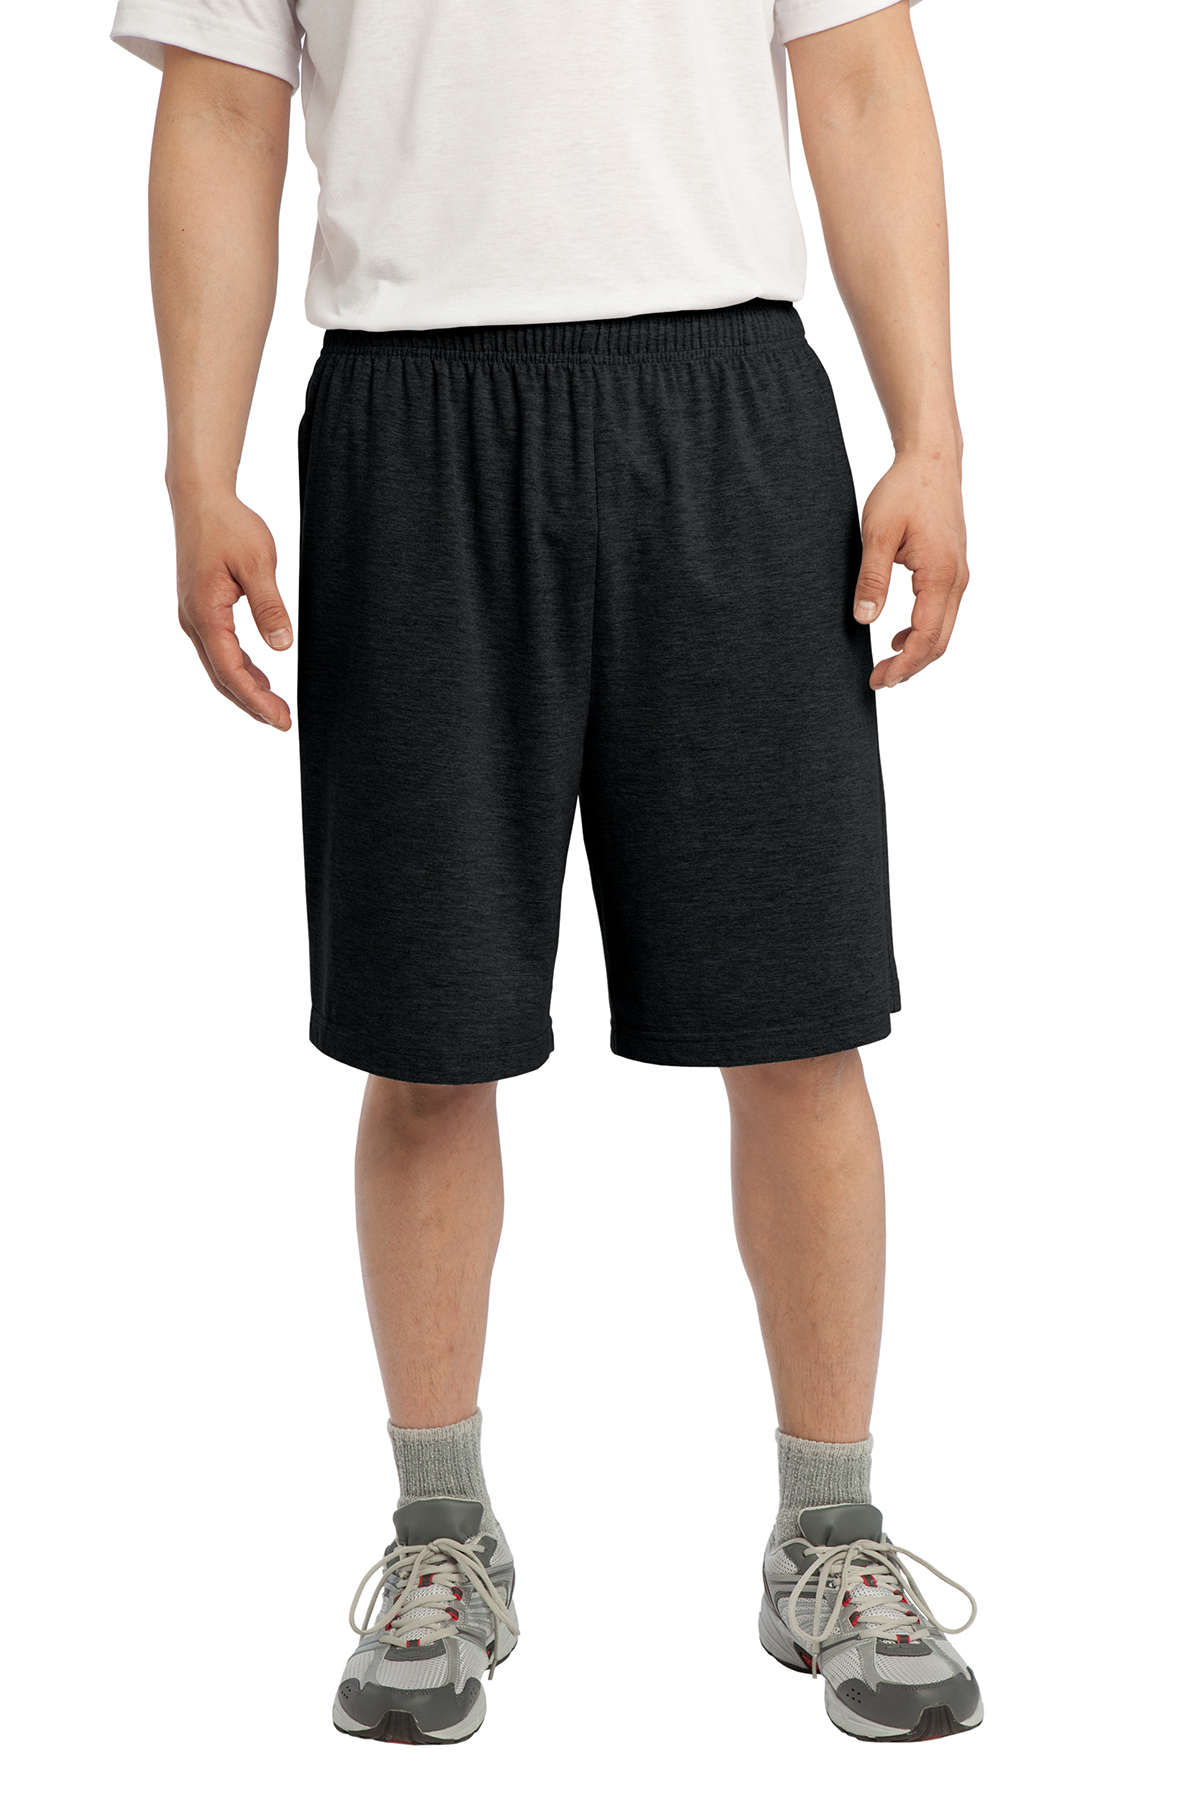 Sport-Tek Jersey Knit Short with Pockets | Product | SanMar